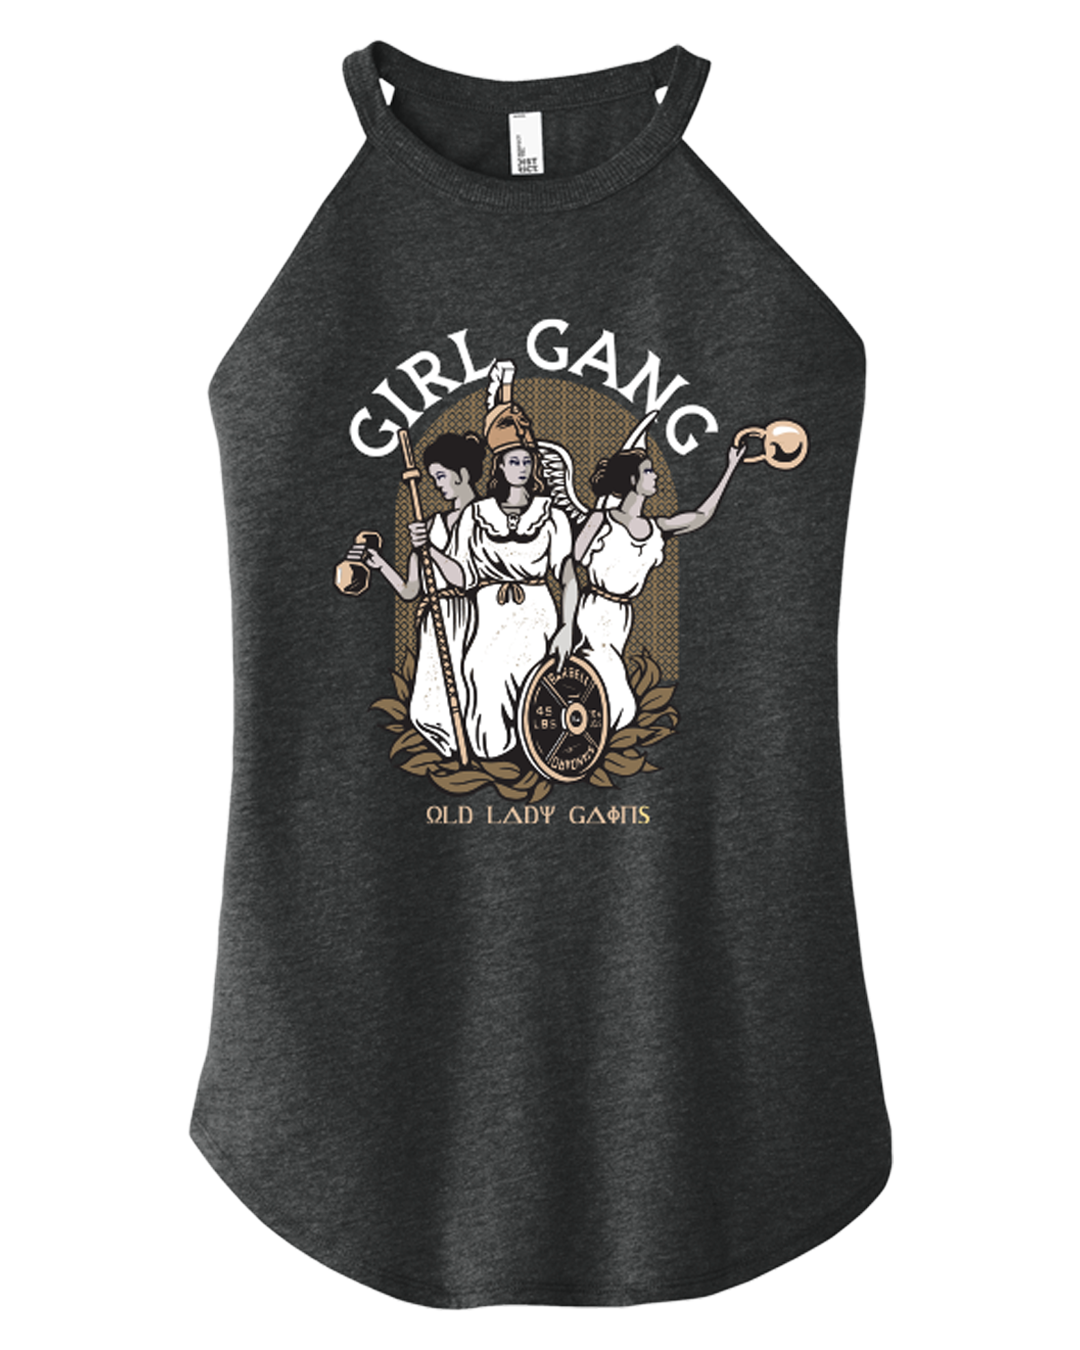 Girl Gang Halter Tank – Old Lady Gains